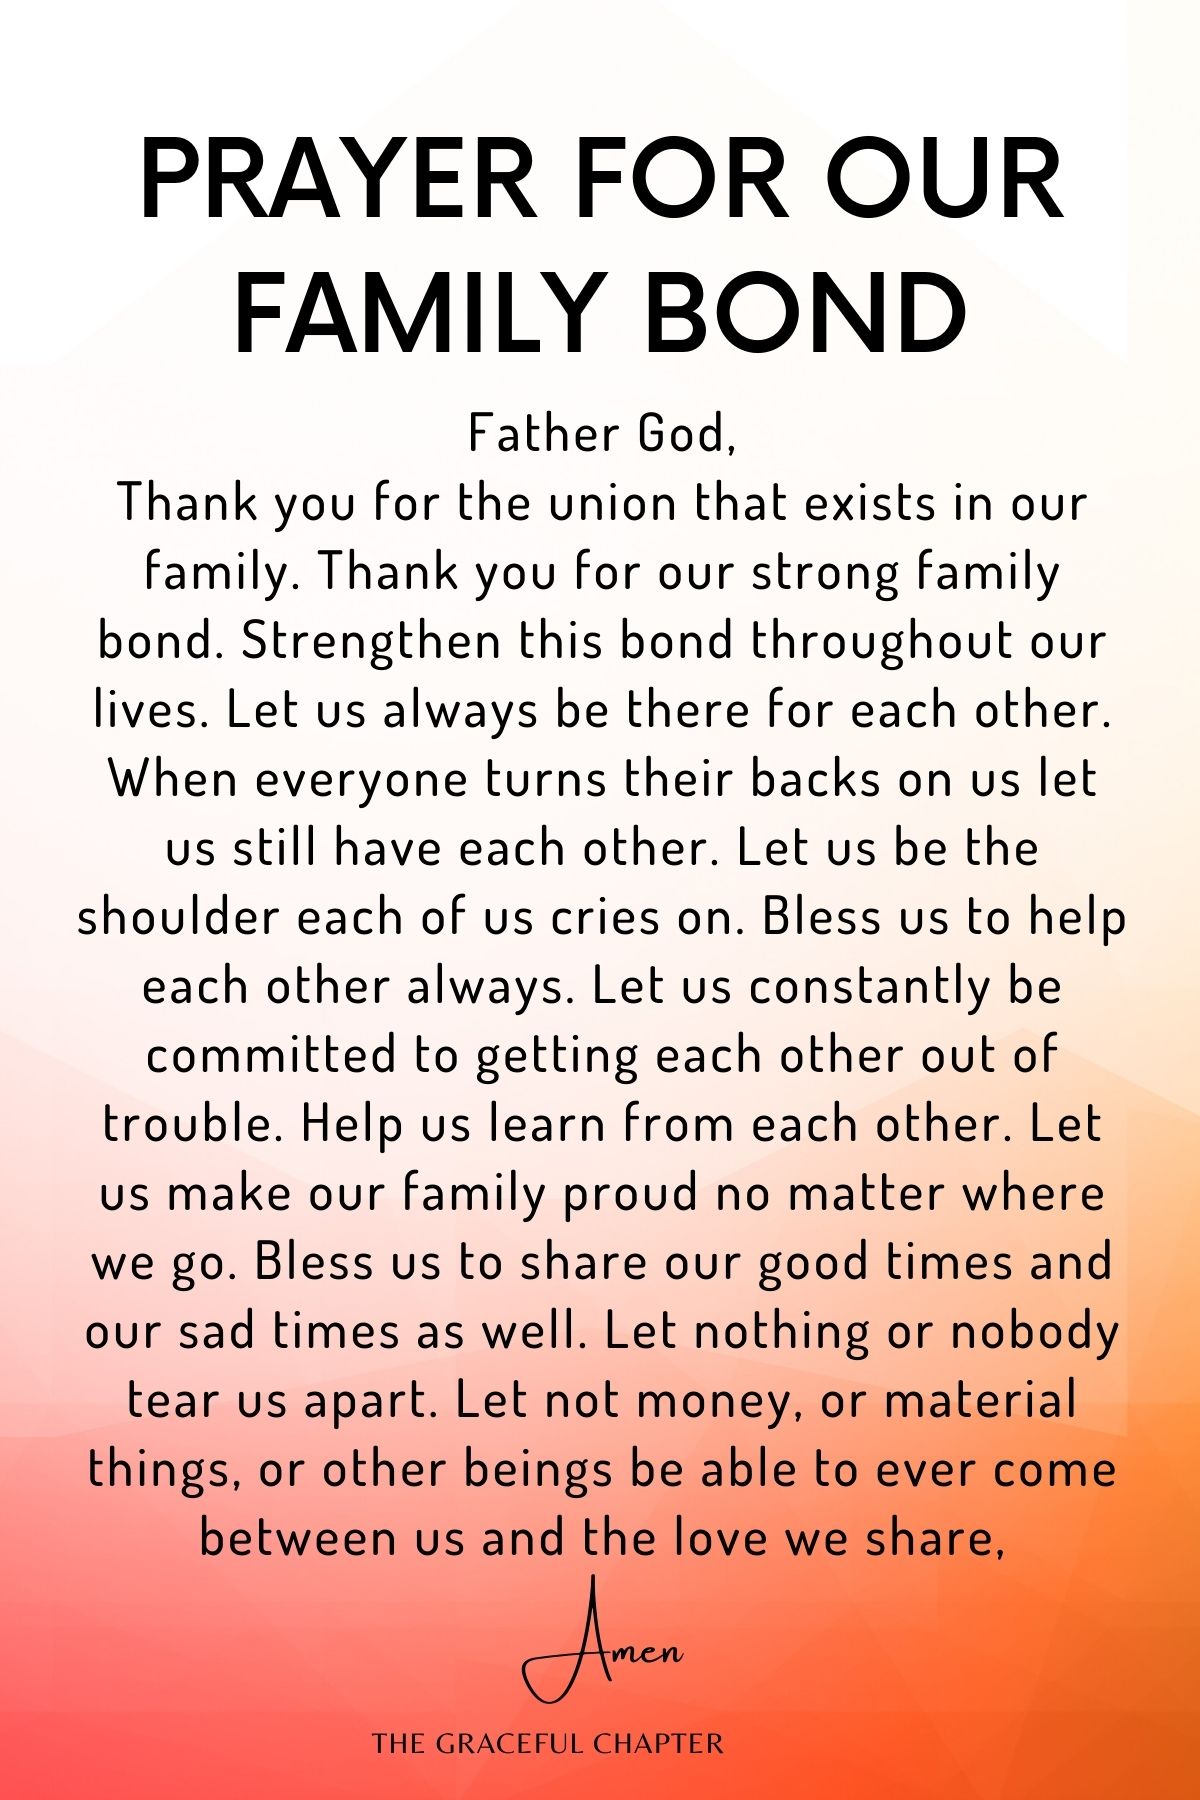 Prayer for our family bond